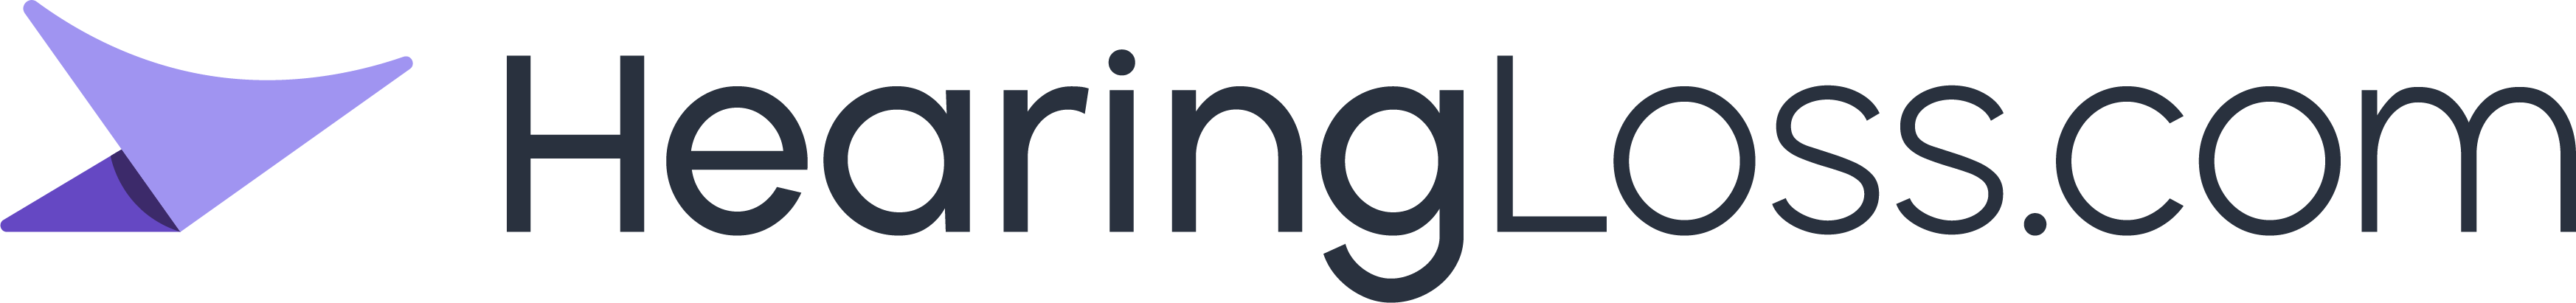 logo_Hearingloss